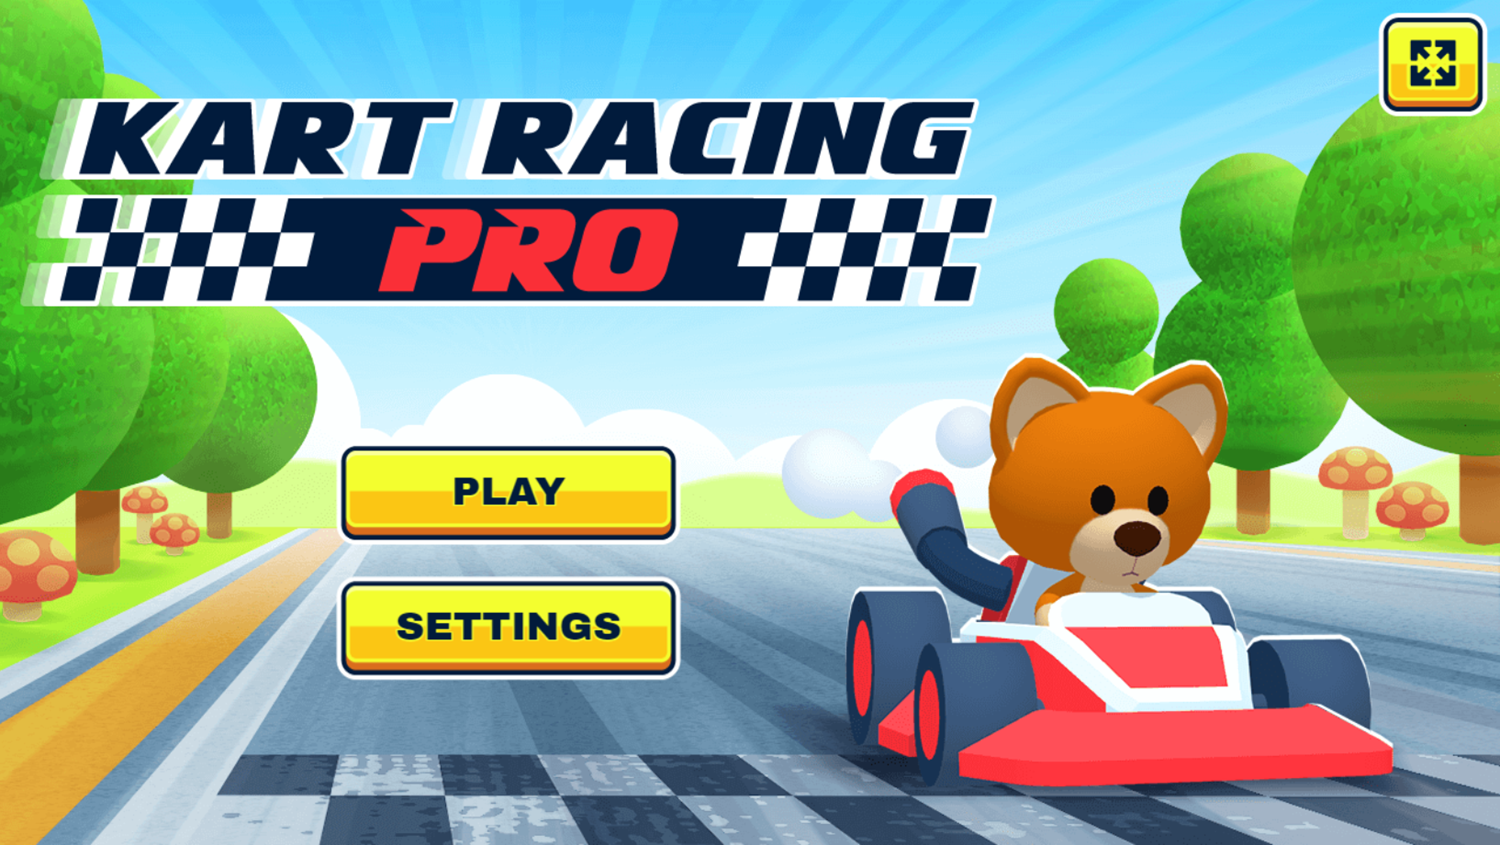 Kart Racing Pro Game Welcome Screen Screenshot.